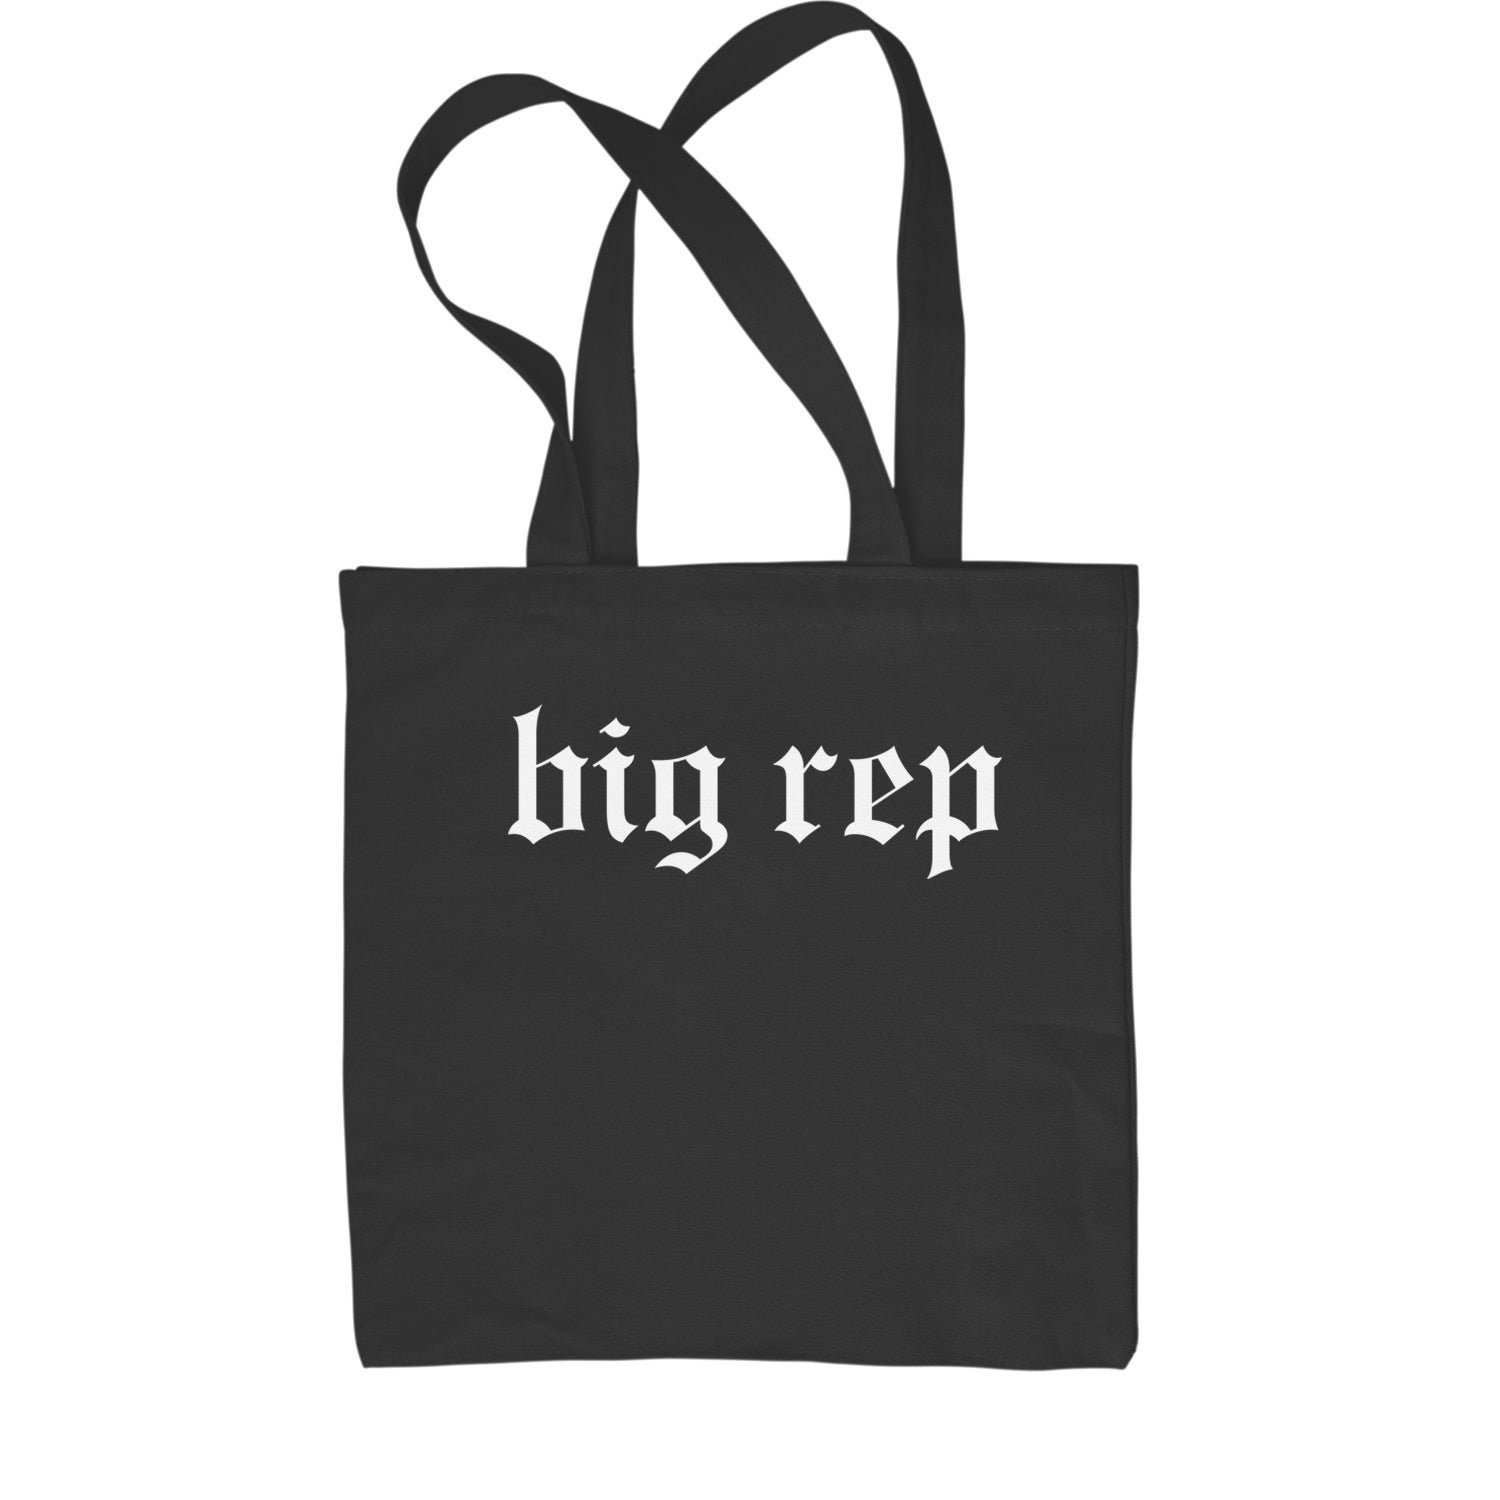 Big Rep Reputation Shopping Tote Bag